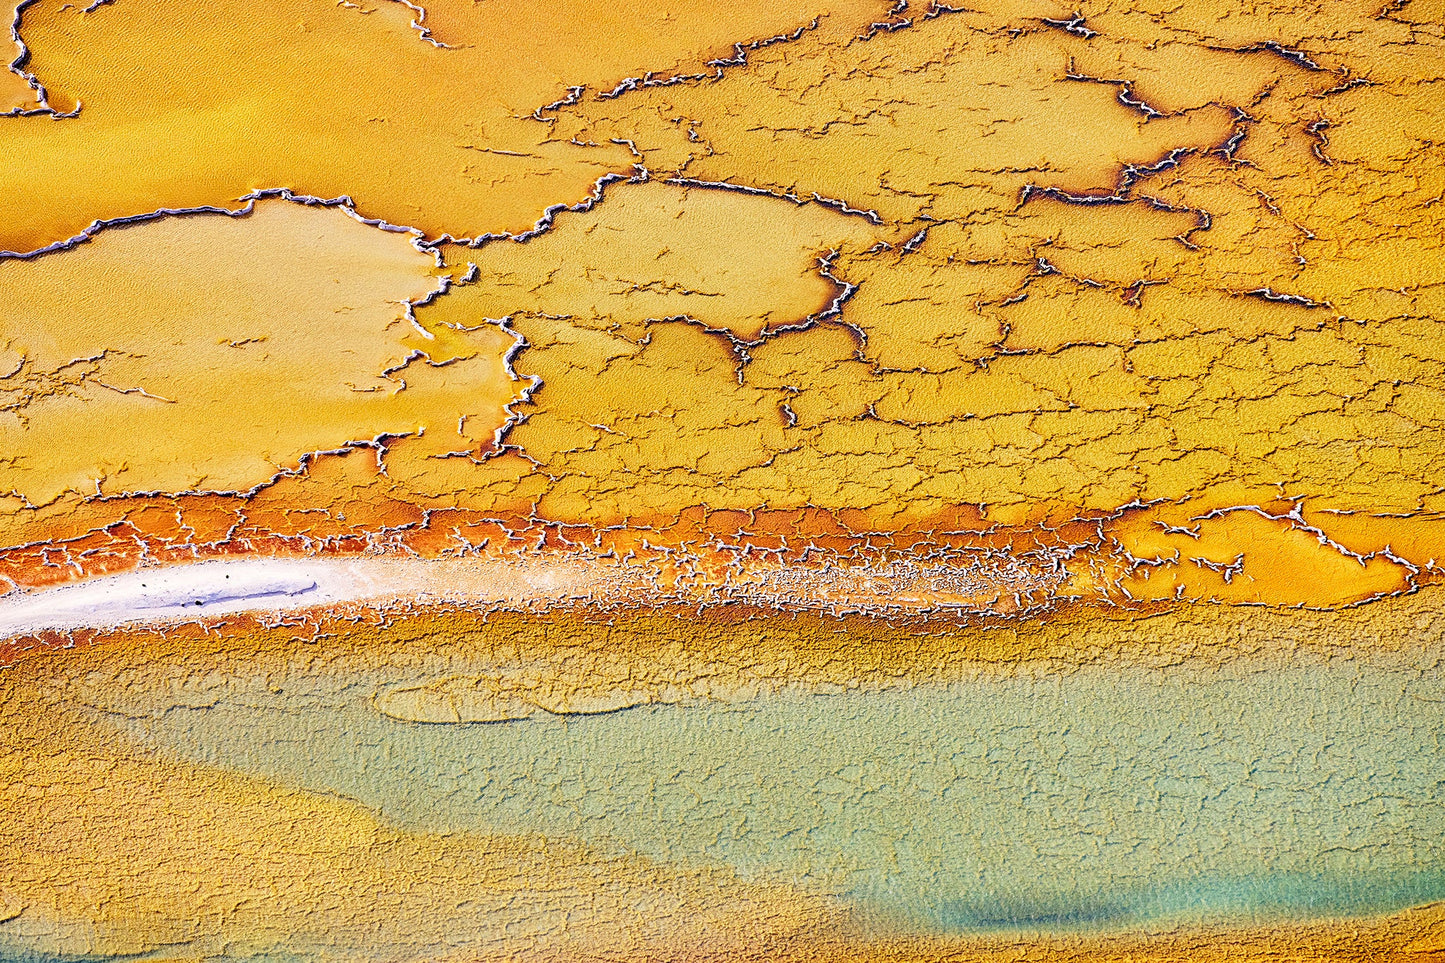 Gold crust - Aerial art, Shark Bay Western Australia